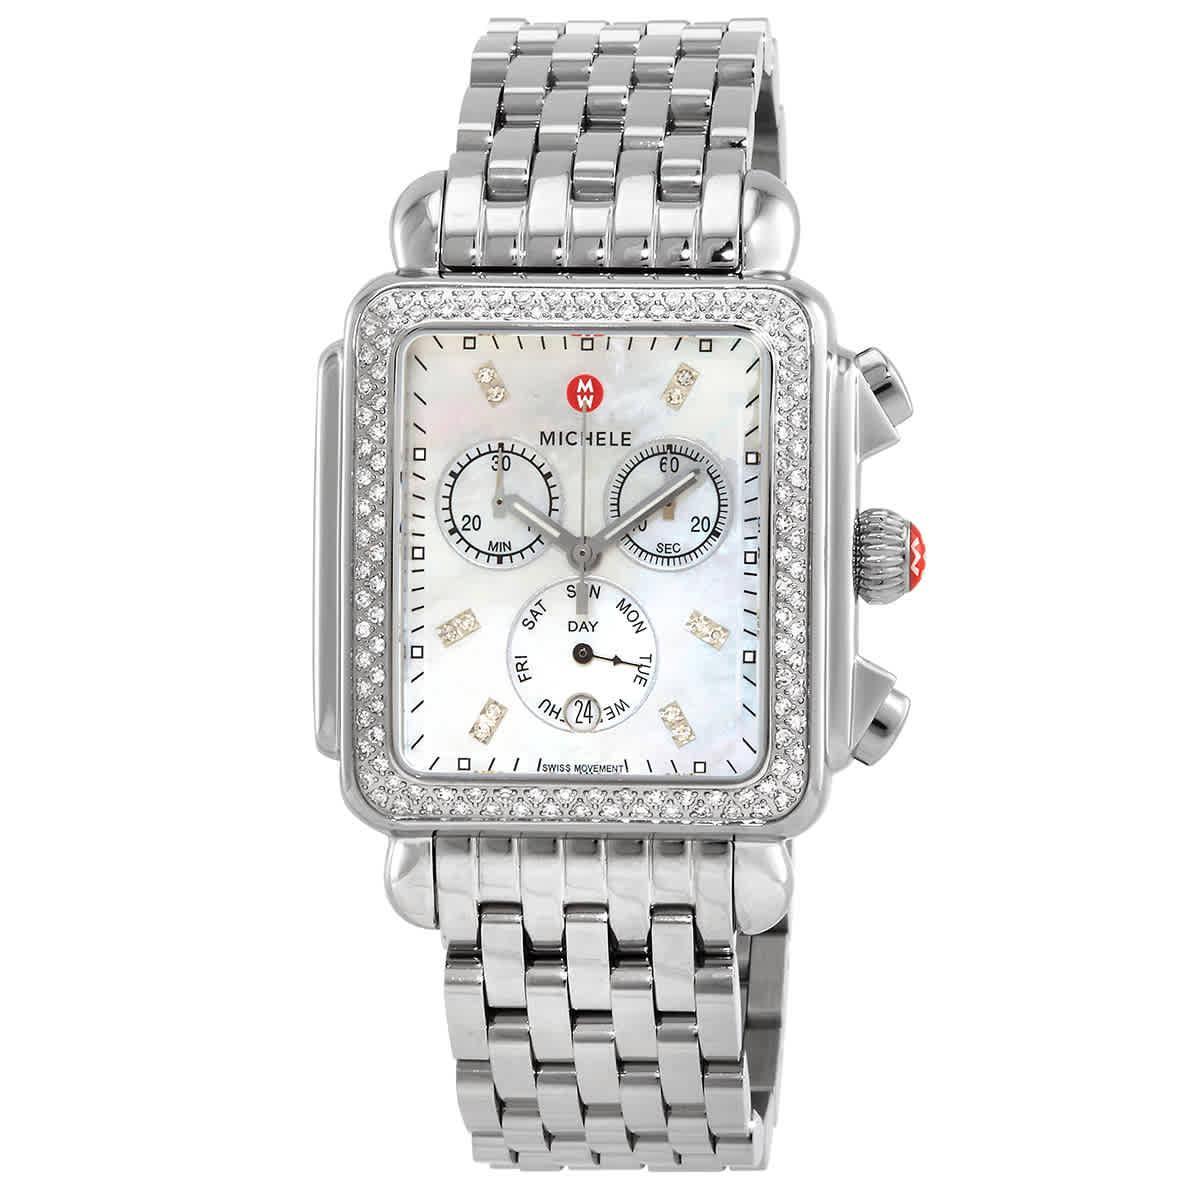 Womens Deco XL Stainless Steel & Diamond Bracelet Watch Product Image